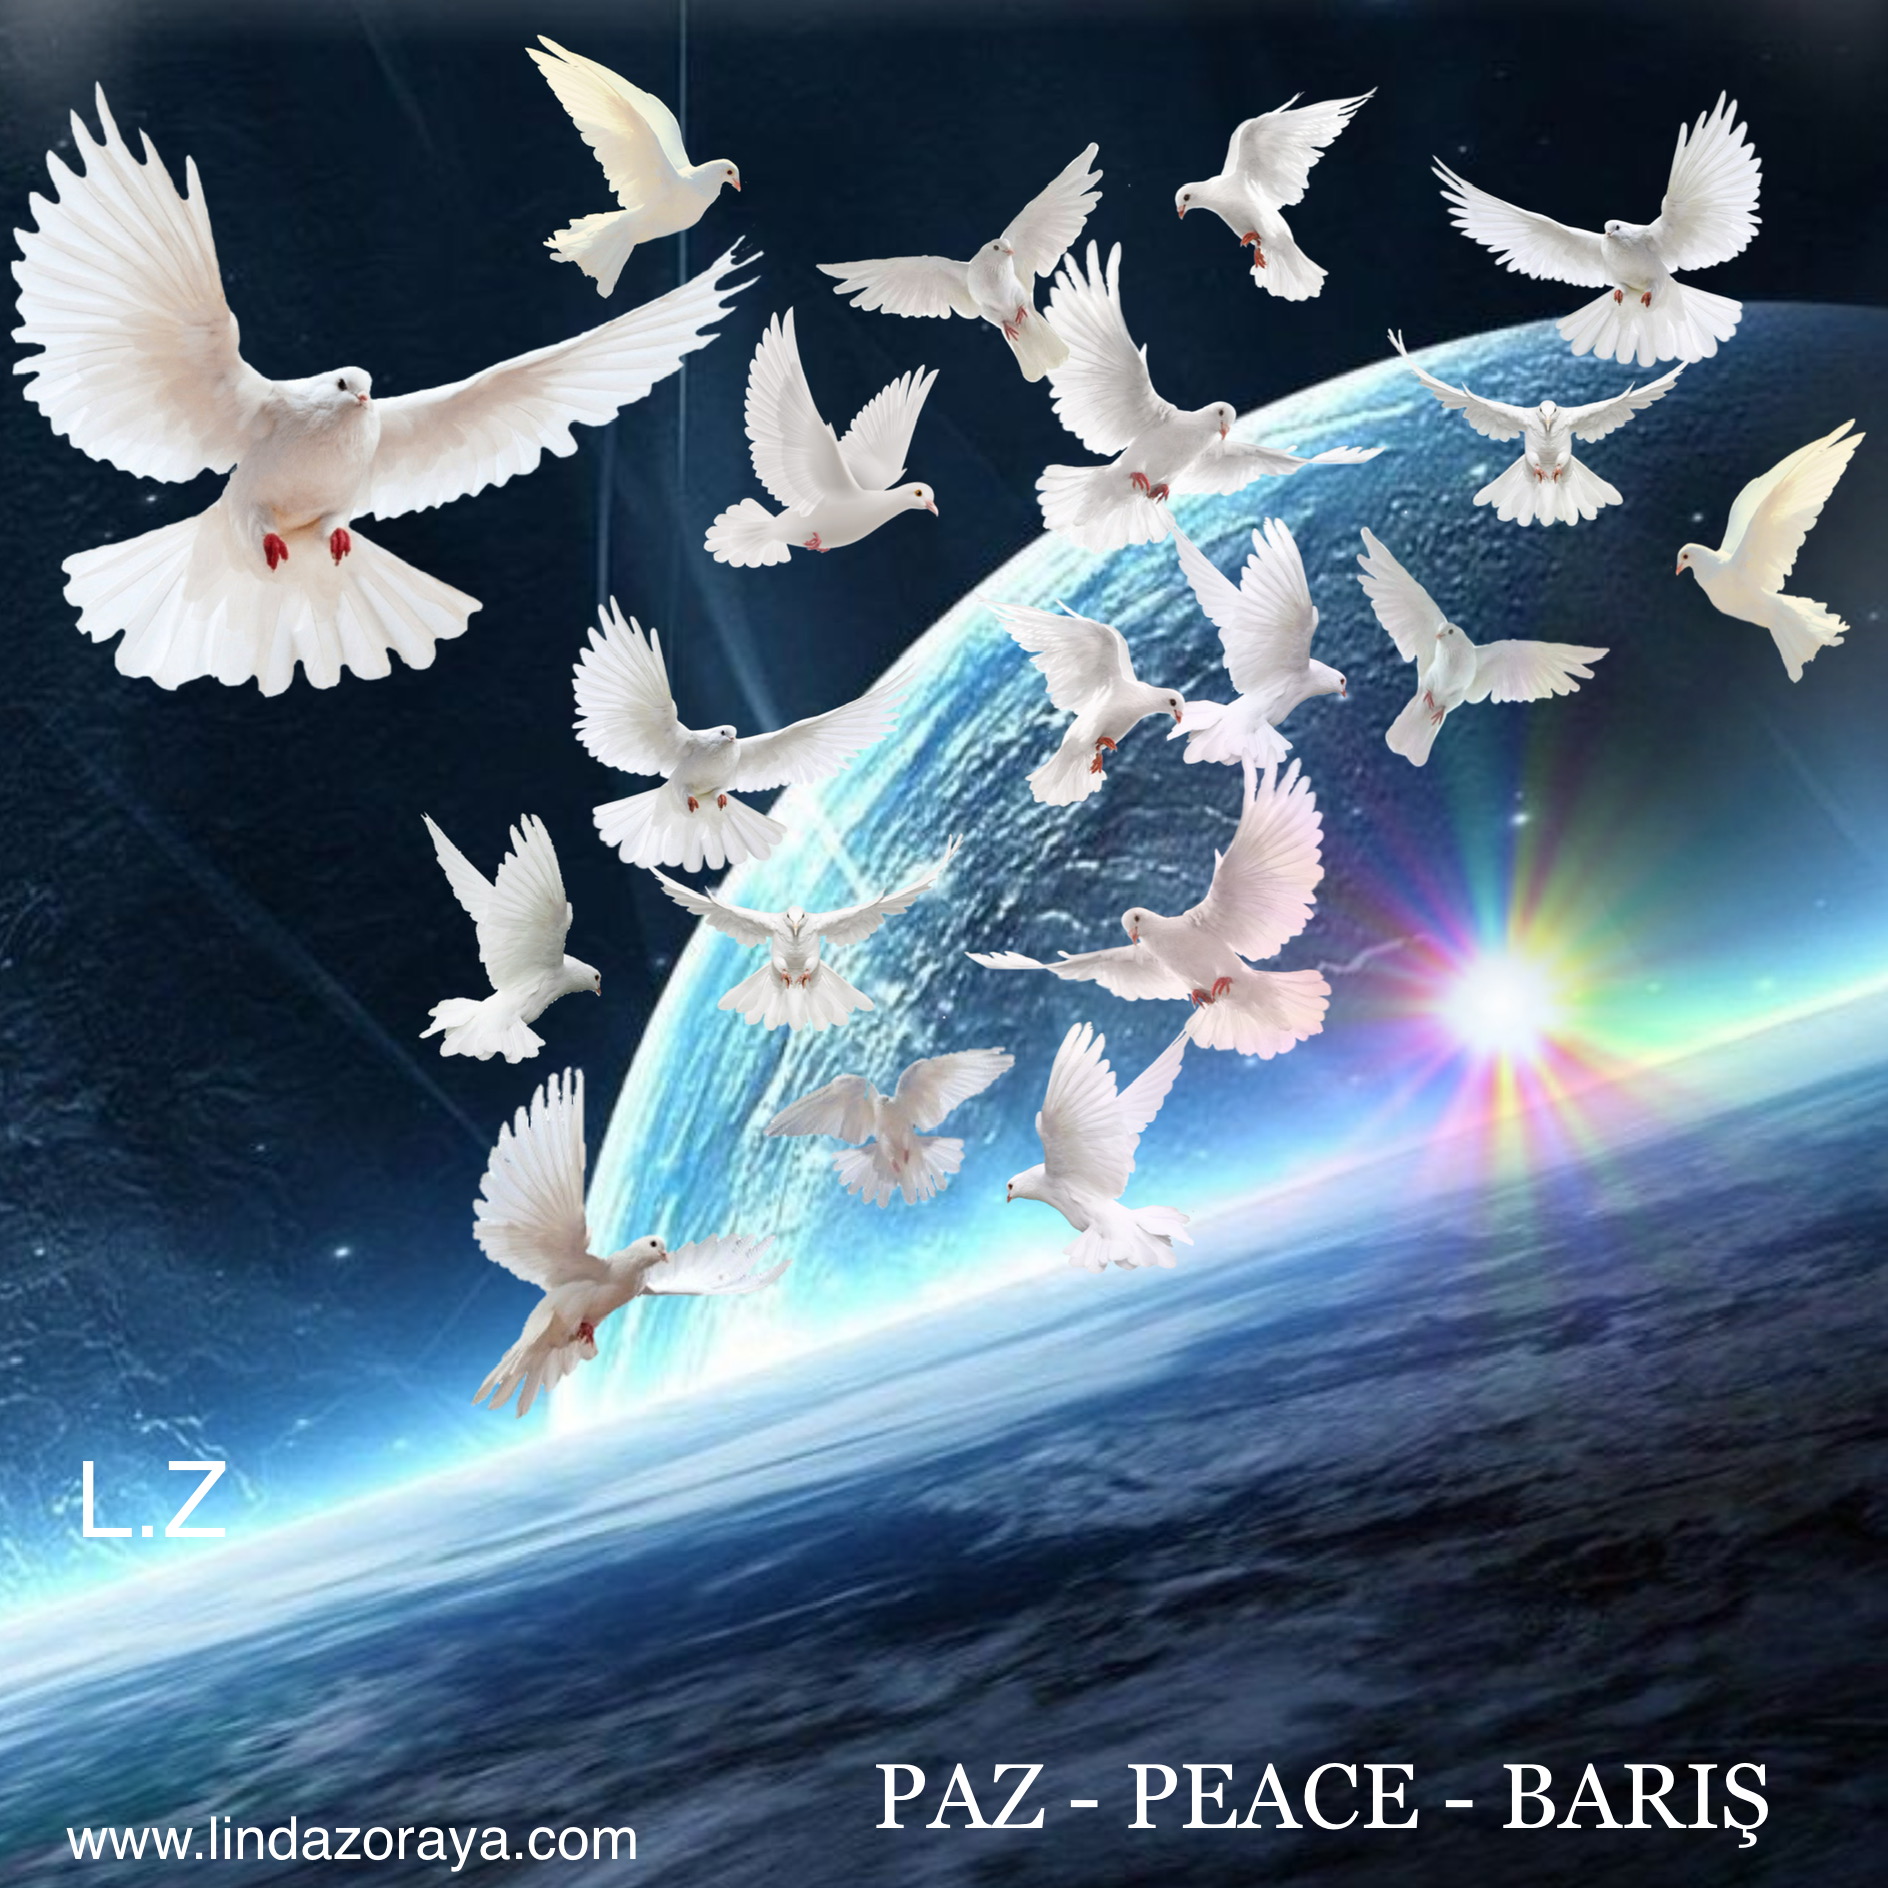 a

www.lindazoraya.com

PAZ - PEACE - BARIS